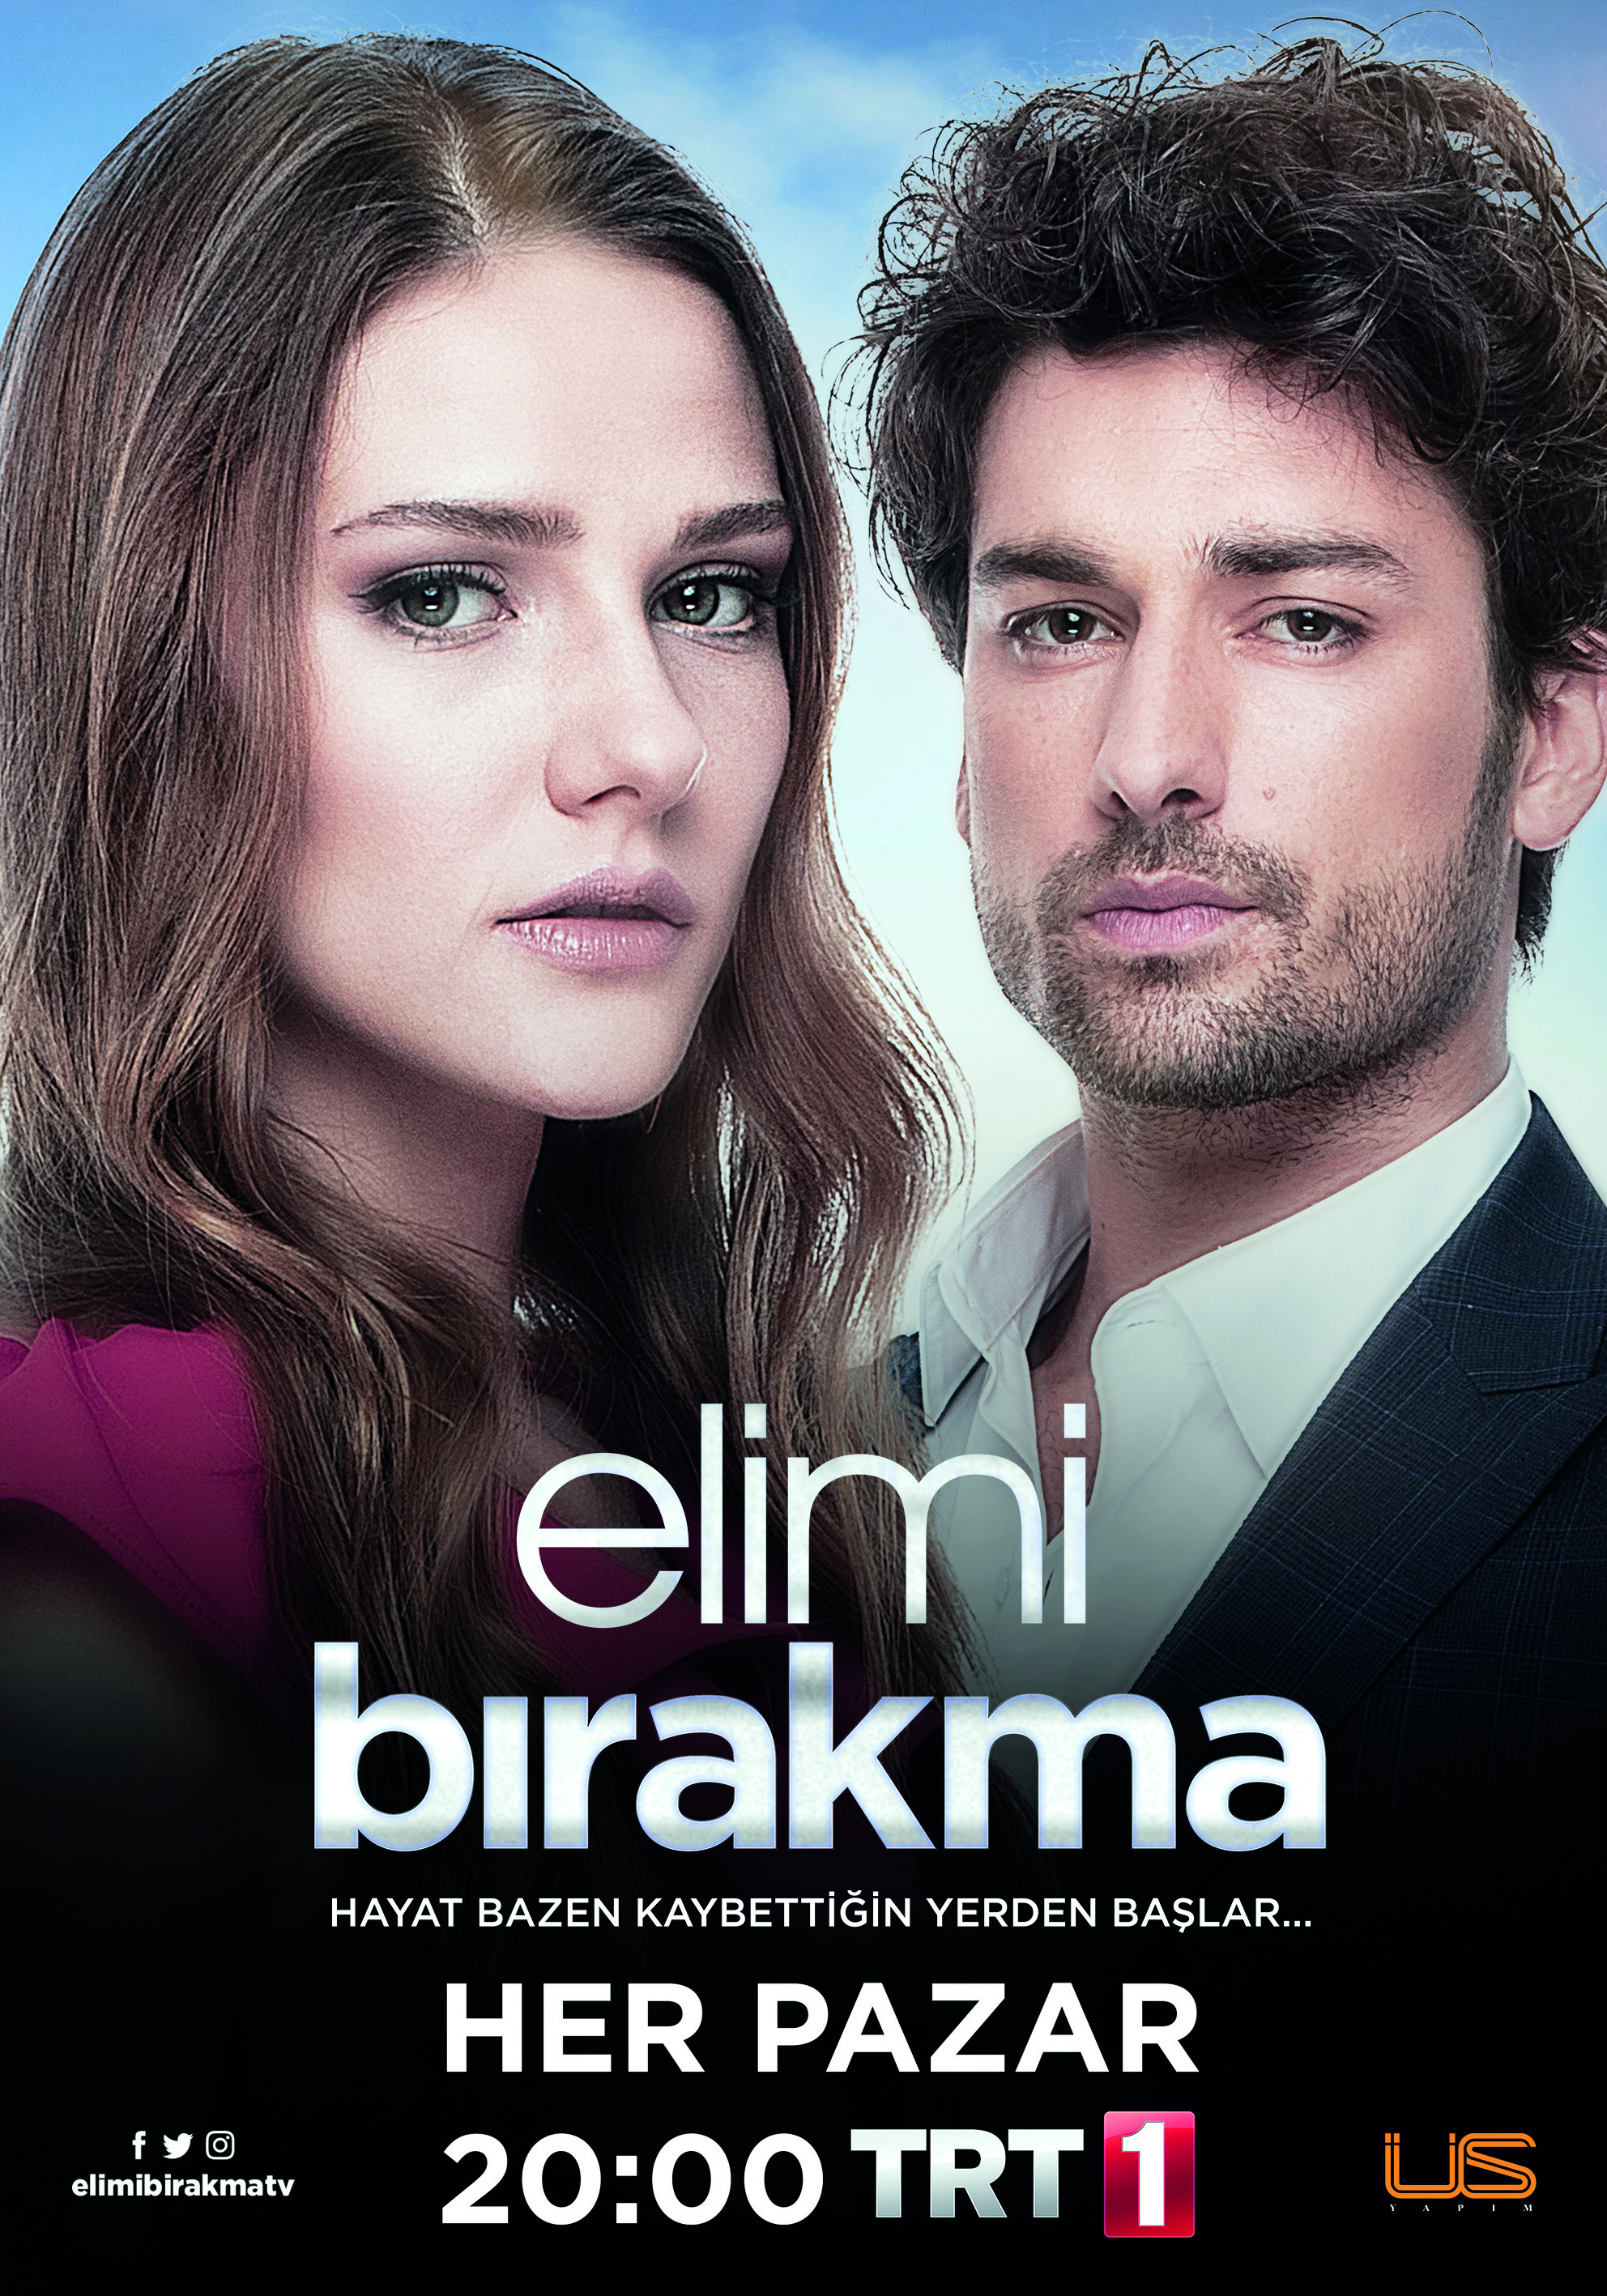 Mega Sized TV Poster Image for Elimi birakma (#1 of 20)